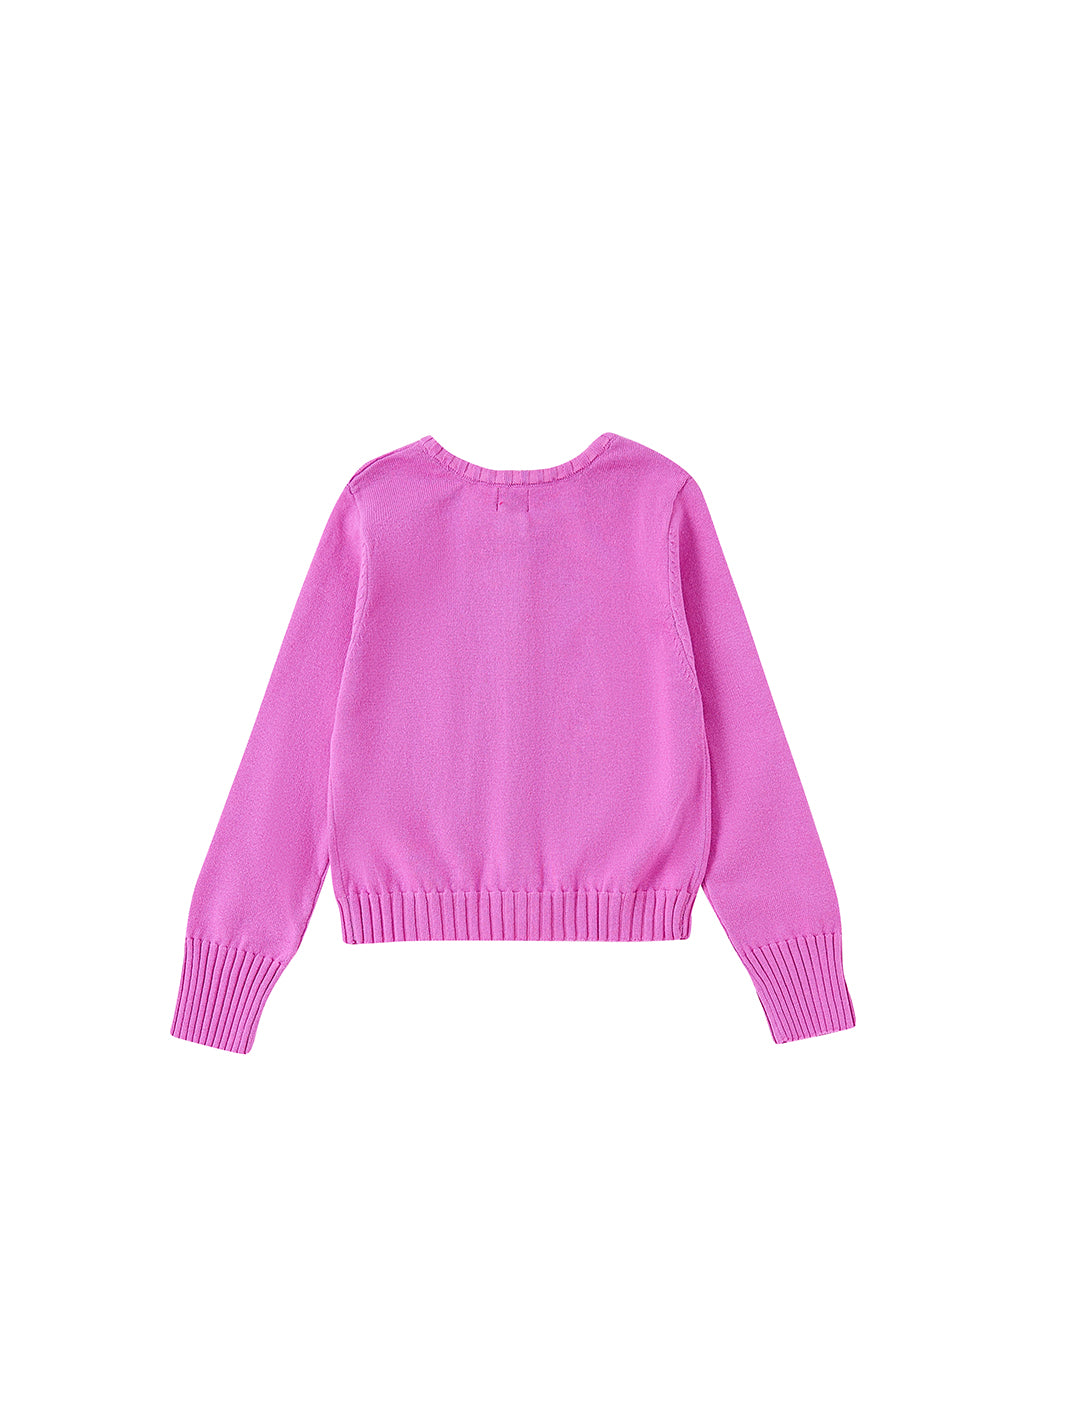 Cardigan Crop Length Sweater